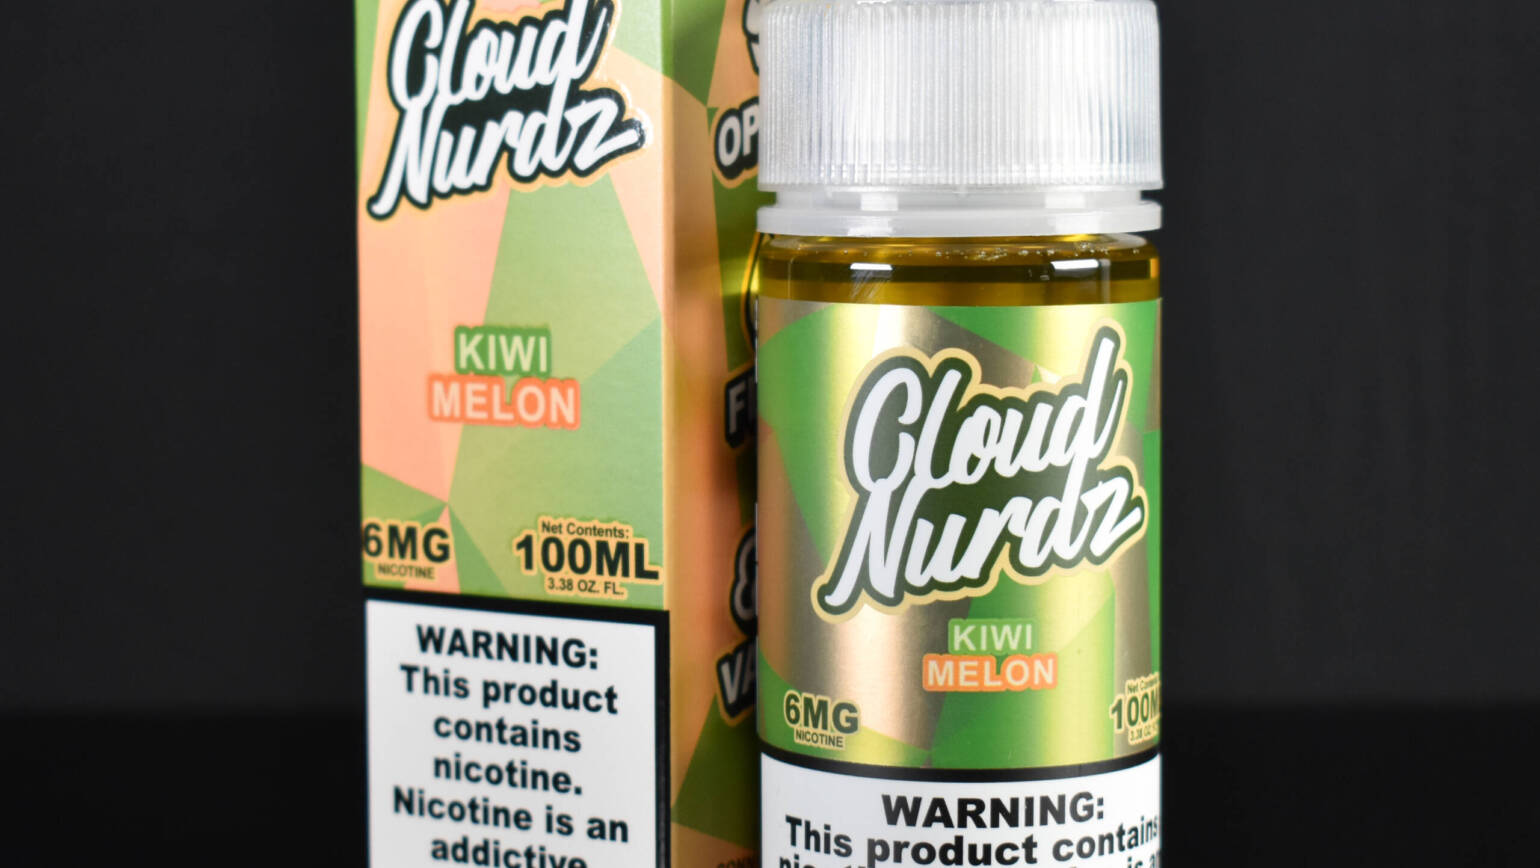 Cloud Nurdz – Kiwi Melon